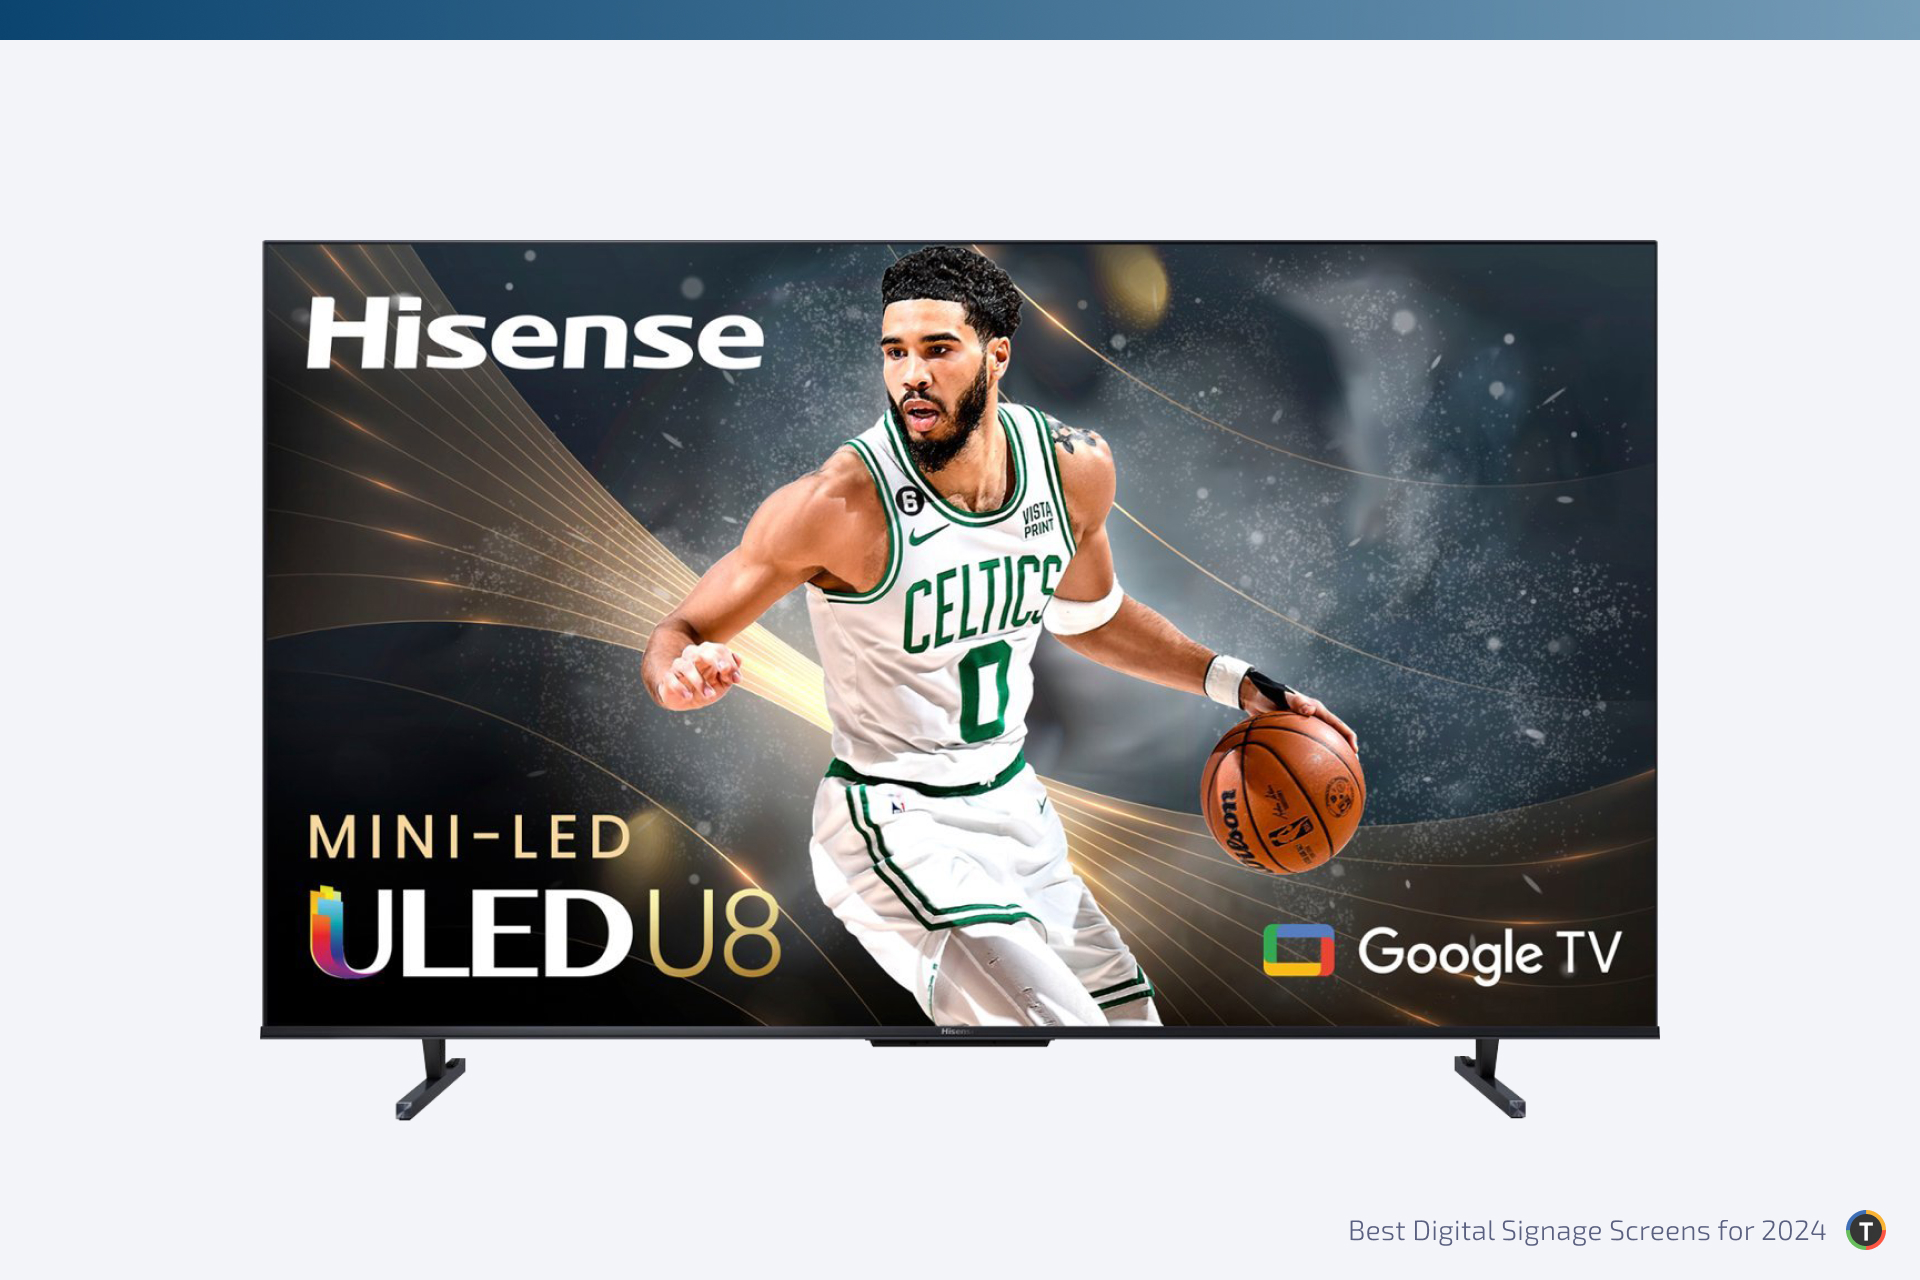 Hisense TVs for Digital Signage